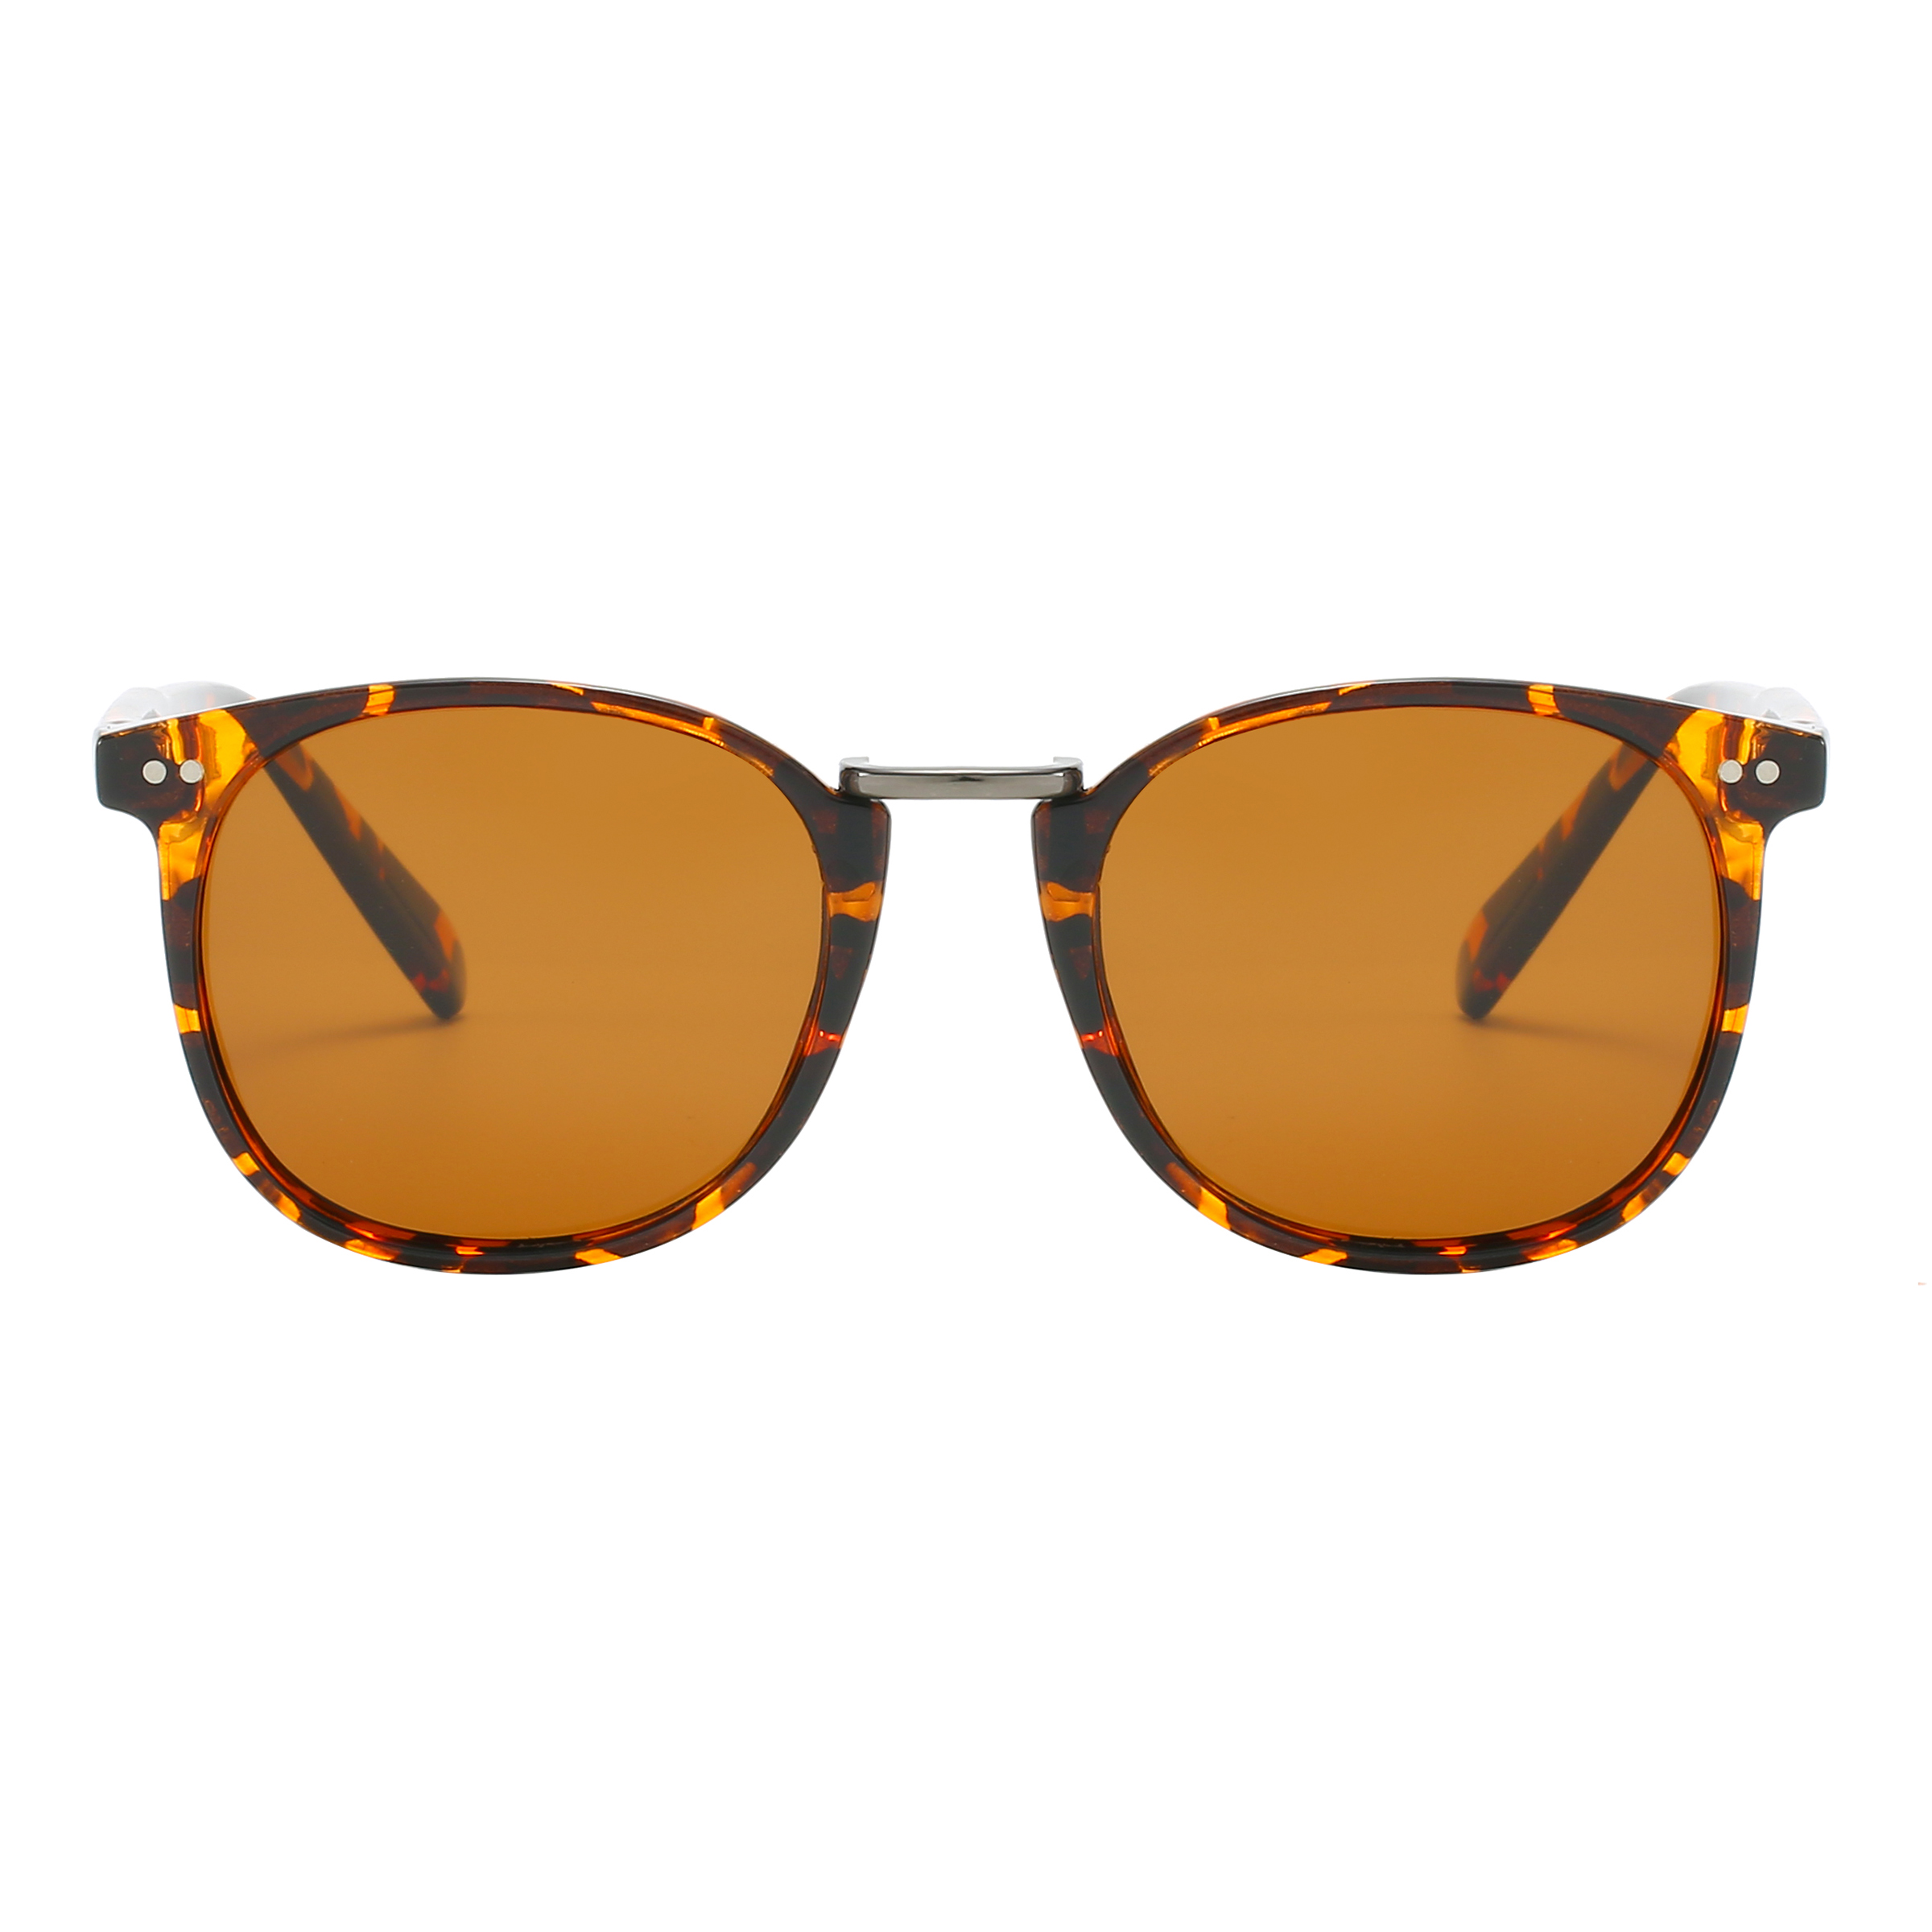 Piranha Eyewear Durado Round Demi Women's Sunglasses with Brown Polarized Lens - image 2 of 4